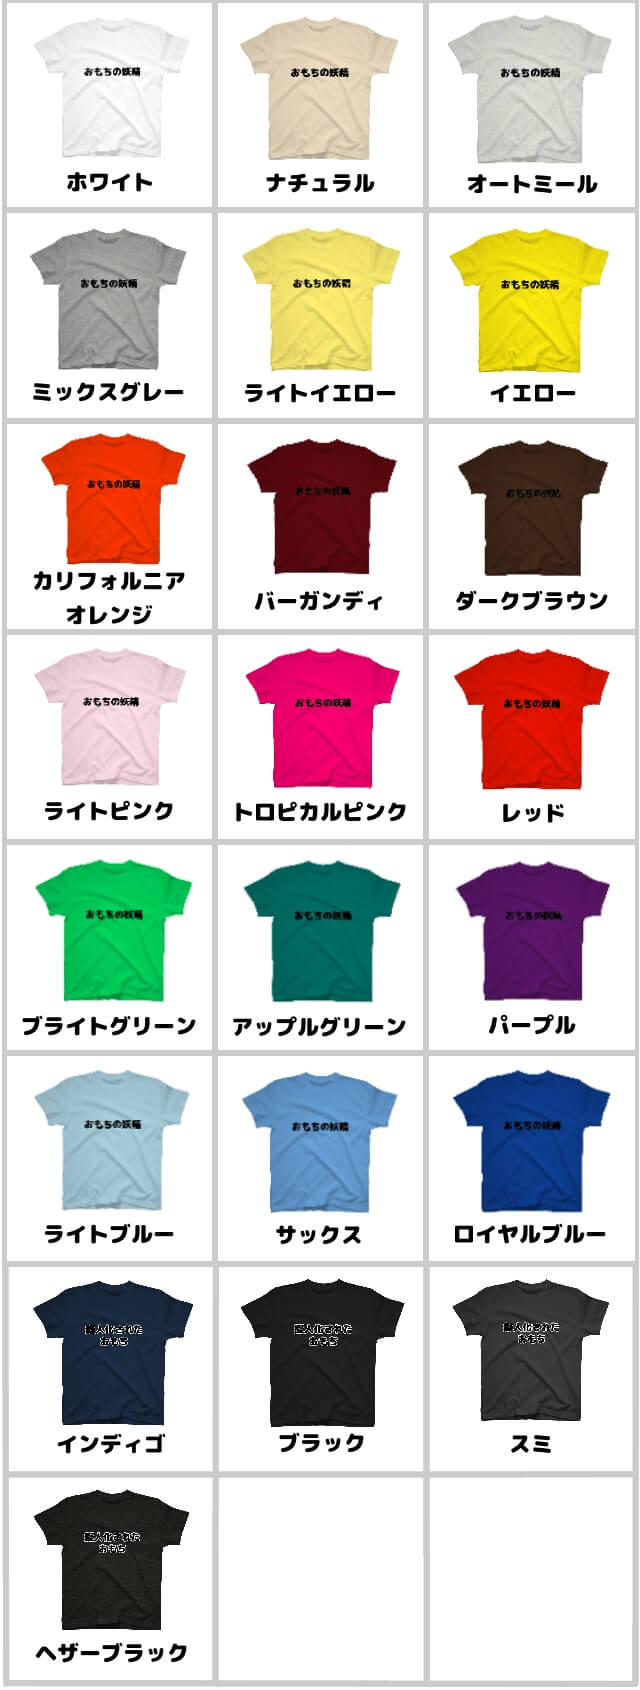 20200526SUZURI-Tシャツ色見本22色